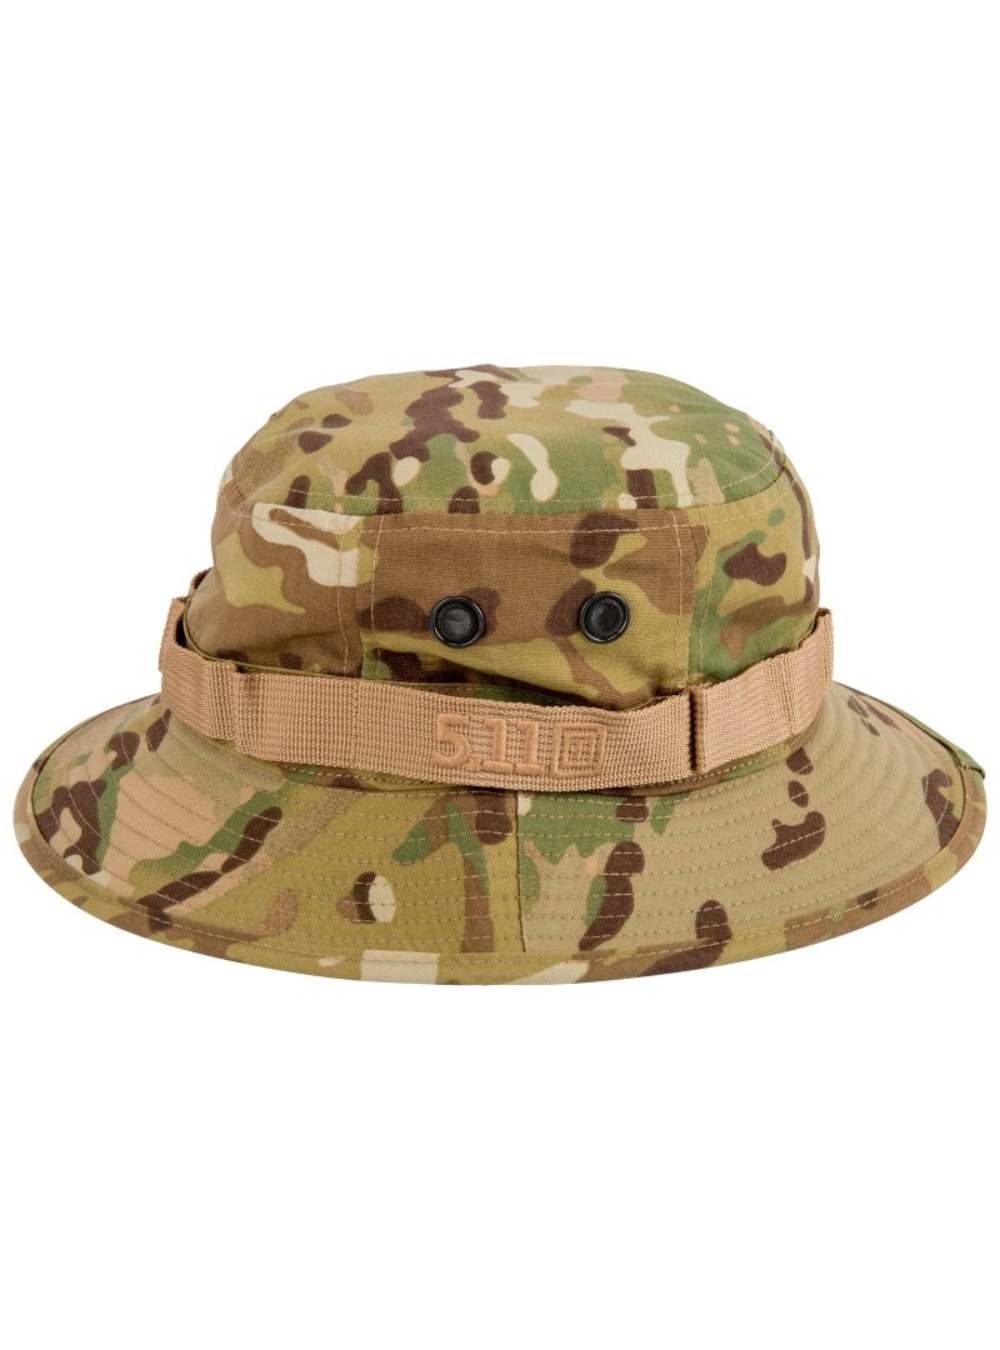 5.11 Tactical Boonie Hat - MultiCam